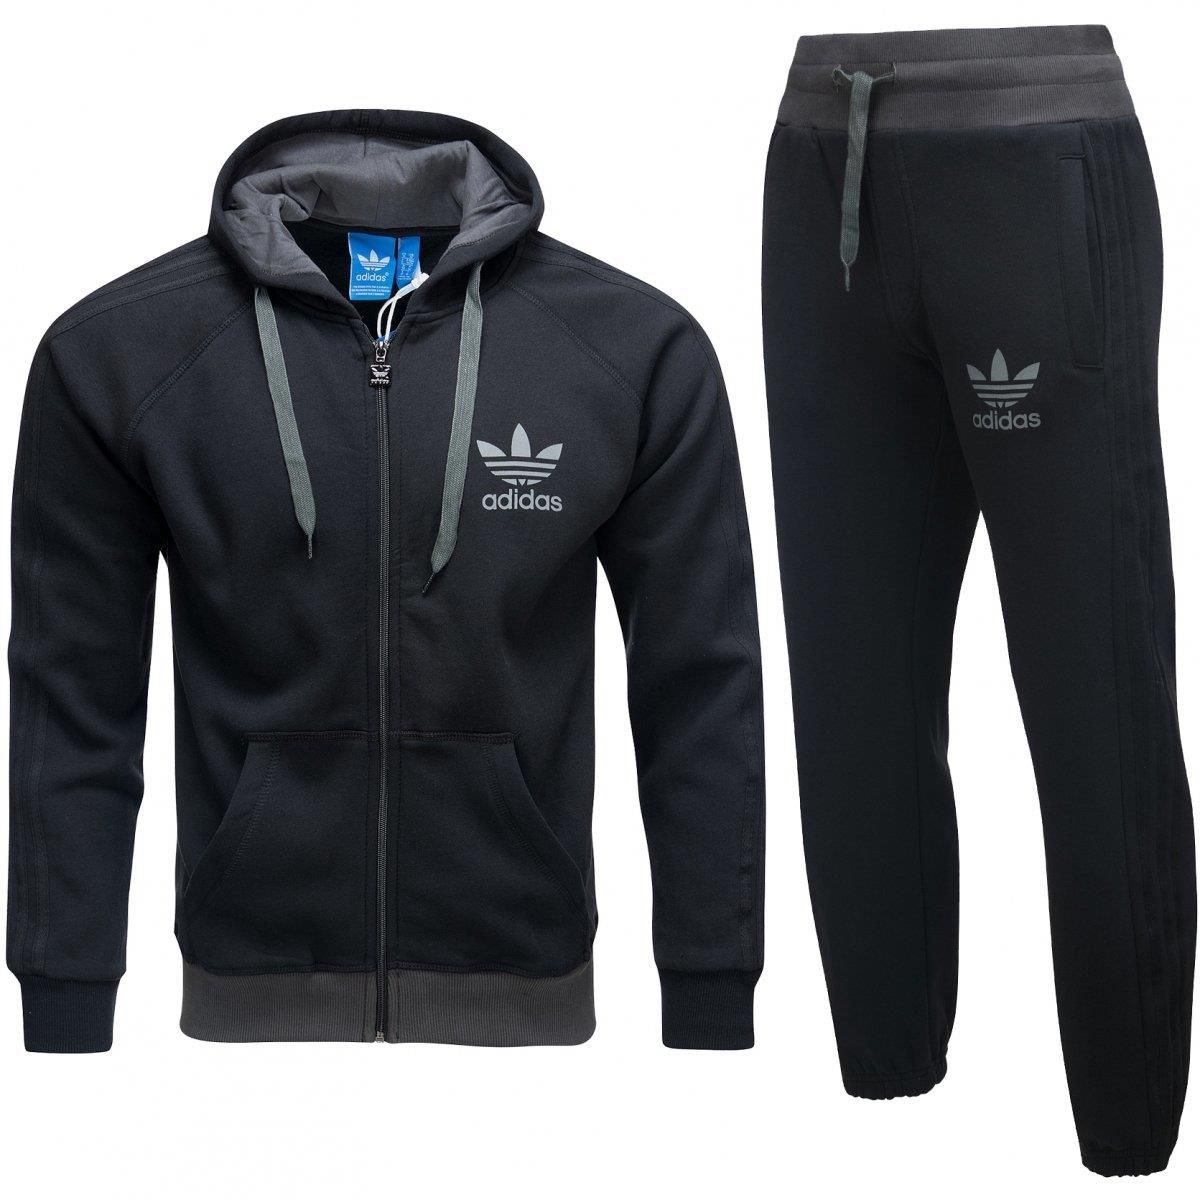 Adidas Originals Mens SPO Zip Through Tracksuit Set Black